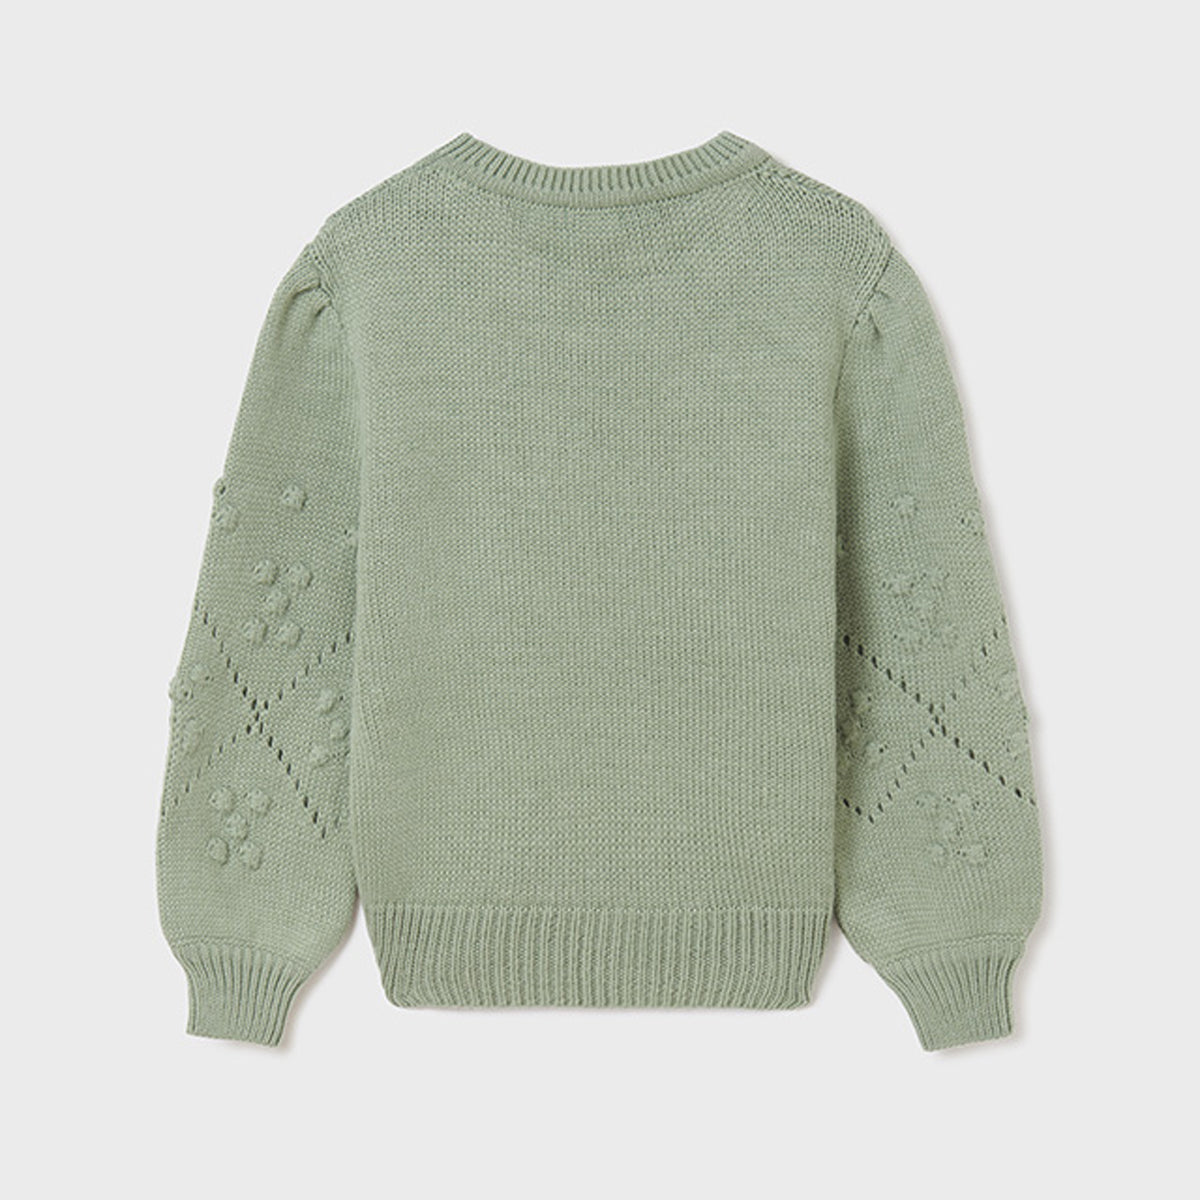 Sage Green Ecofriends Sweater With Pom Poms